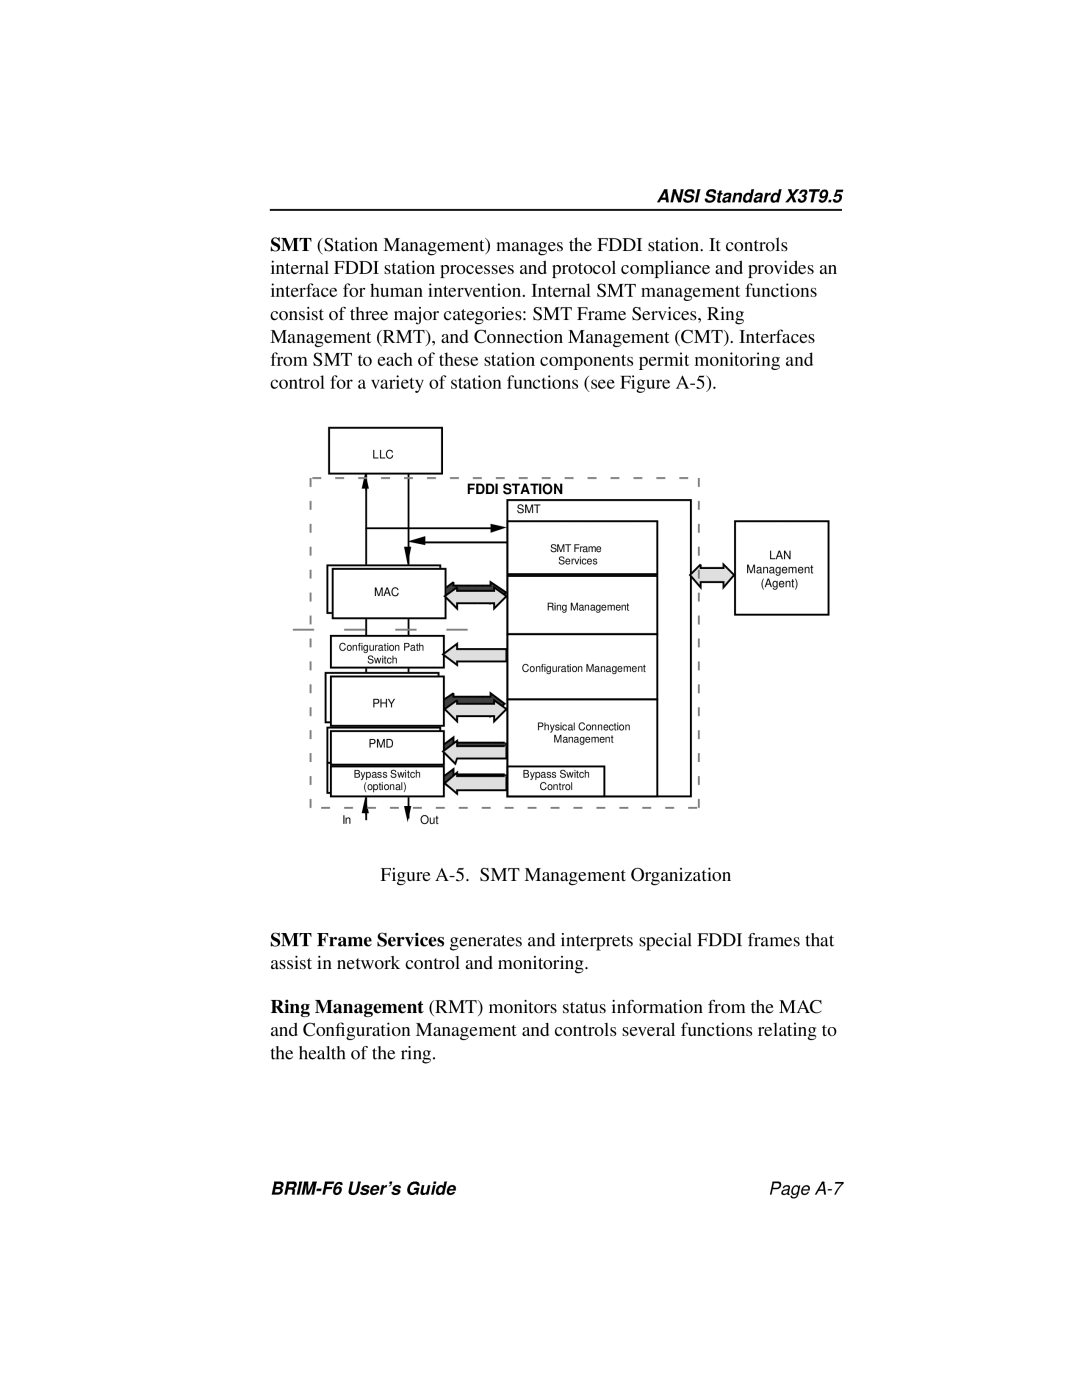 Cabletron Systems BRIM-F6 manual Figure A-5. SMT Management Organization 